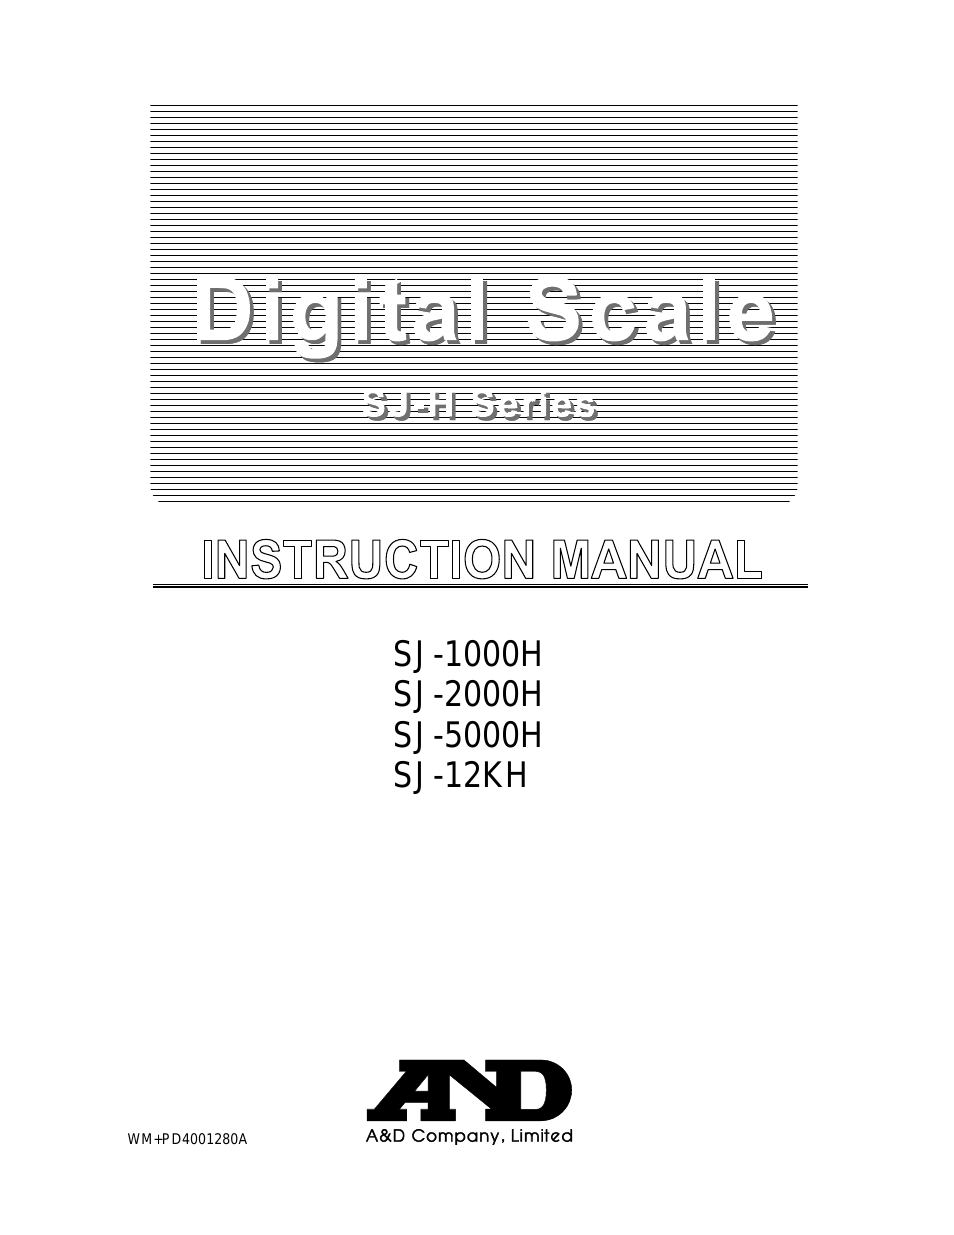 A & D Digital Scale SH-1000H/SJ-2000H/SJ-5000H/SJ-12KH (Page 1)